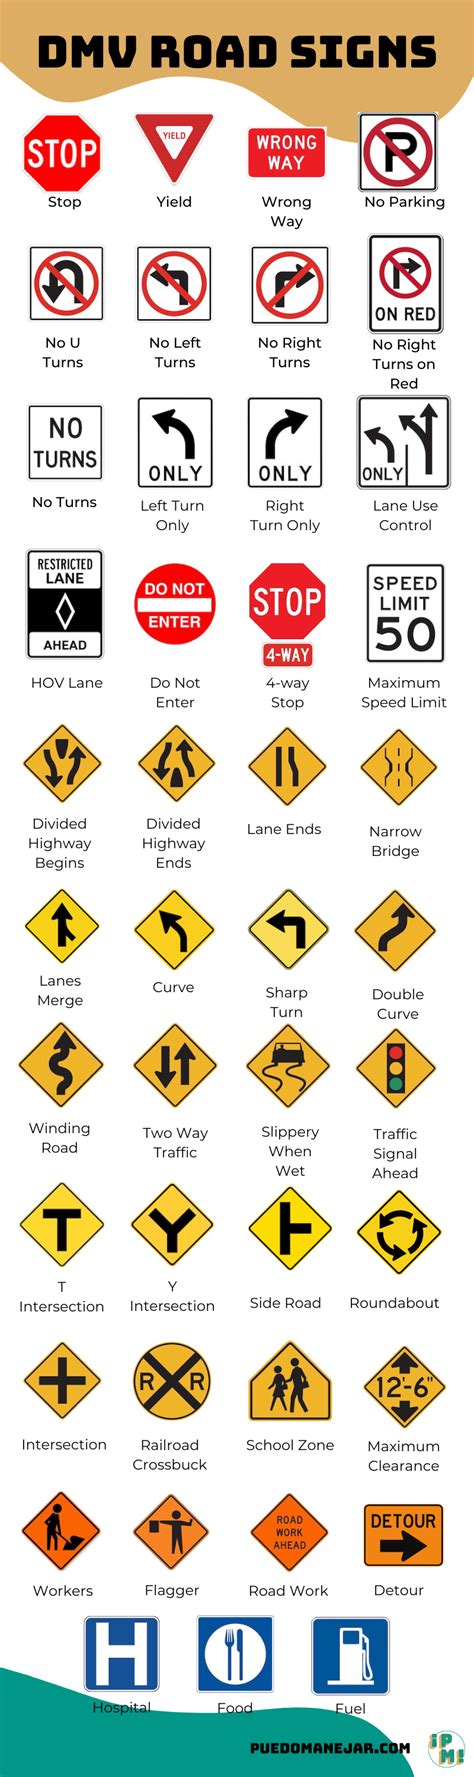 Dmv Road Signs Practice Test